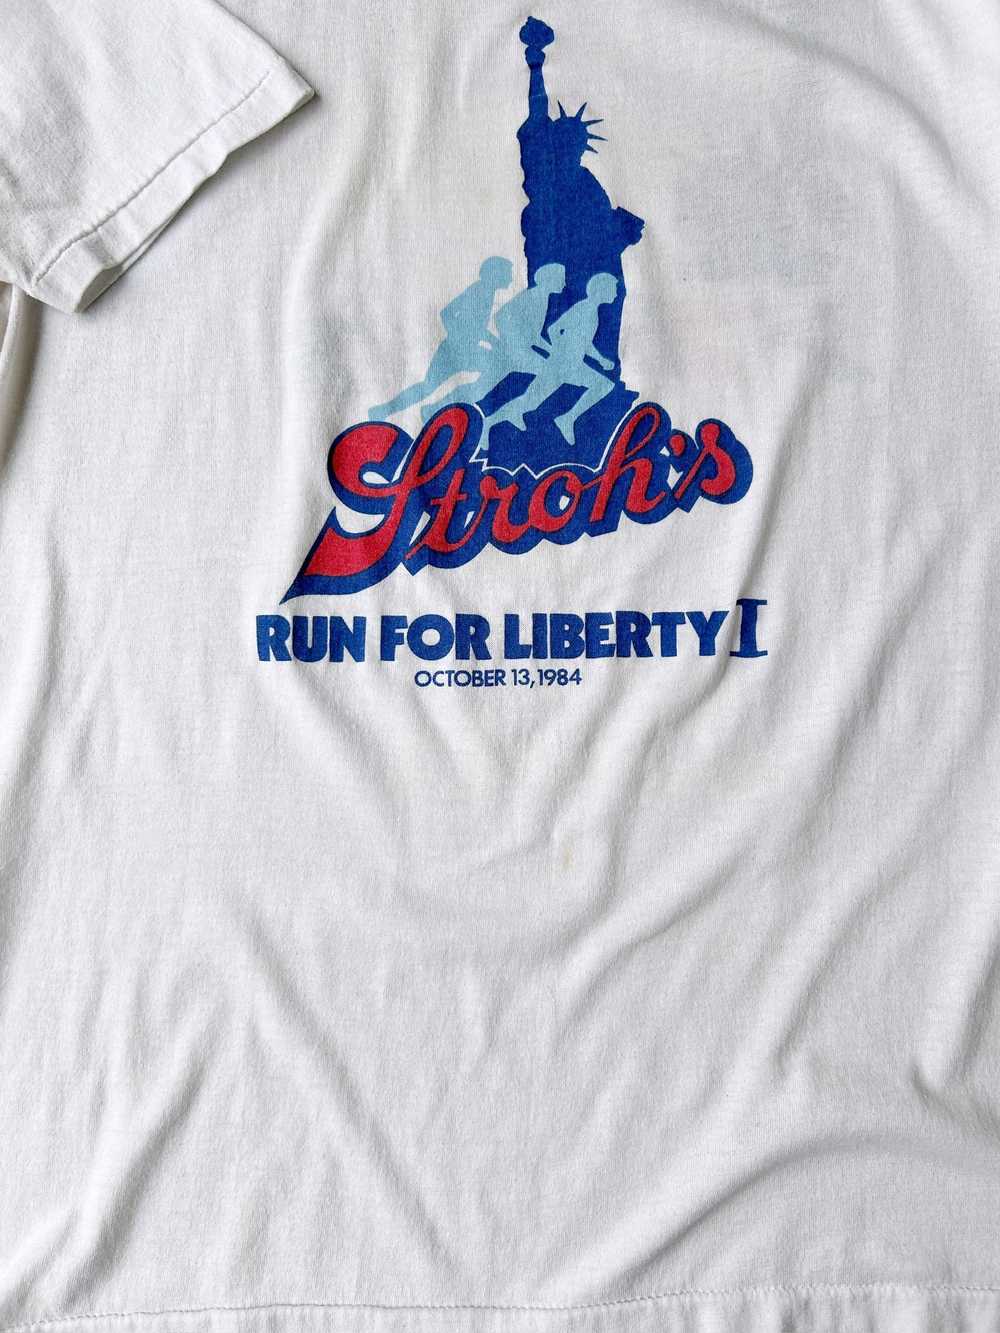 Stroh's Run for Liberty I T-Shirt '84 - Medium / … - image 4